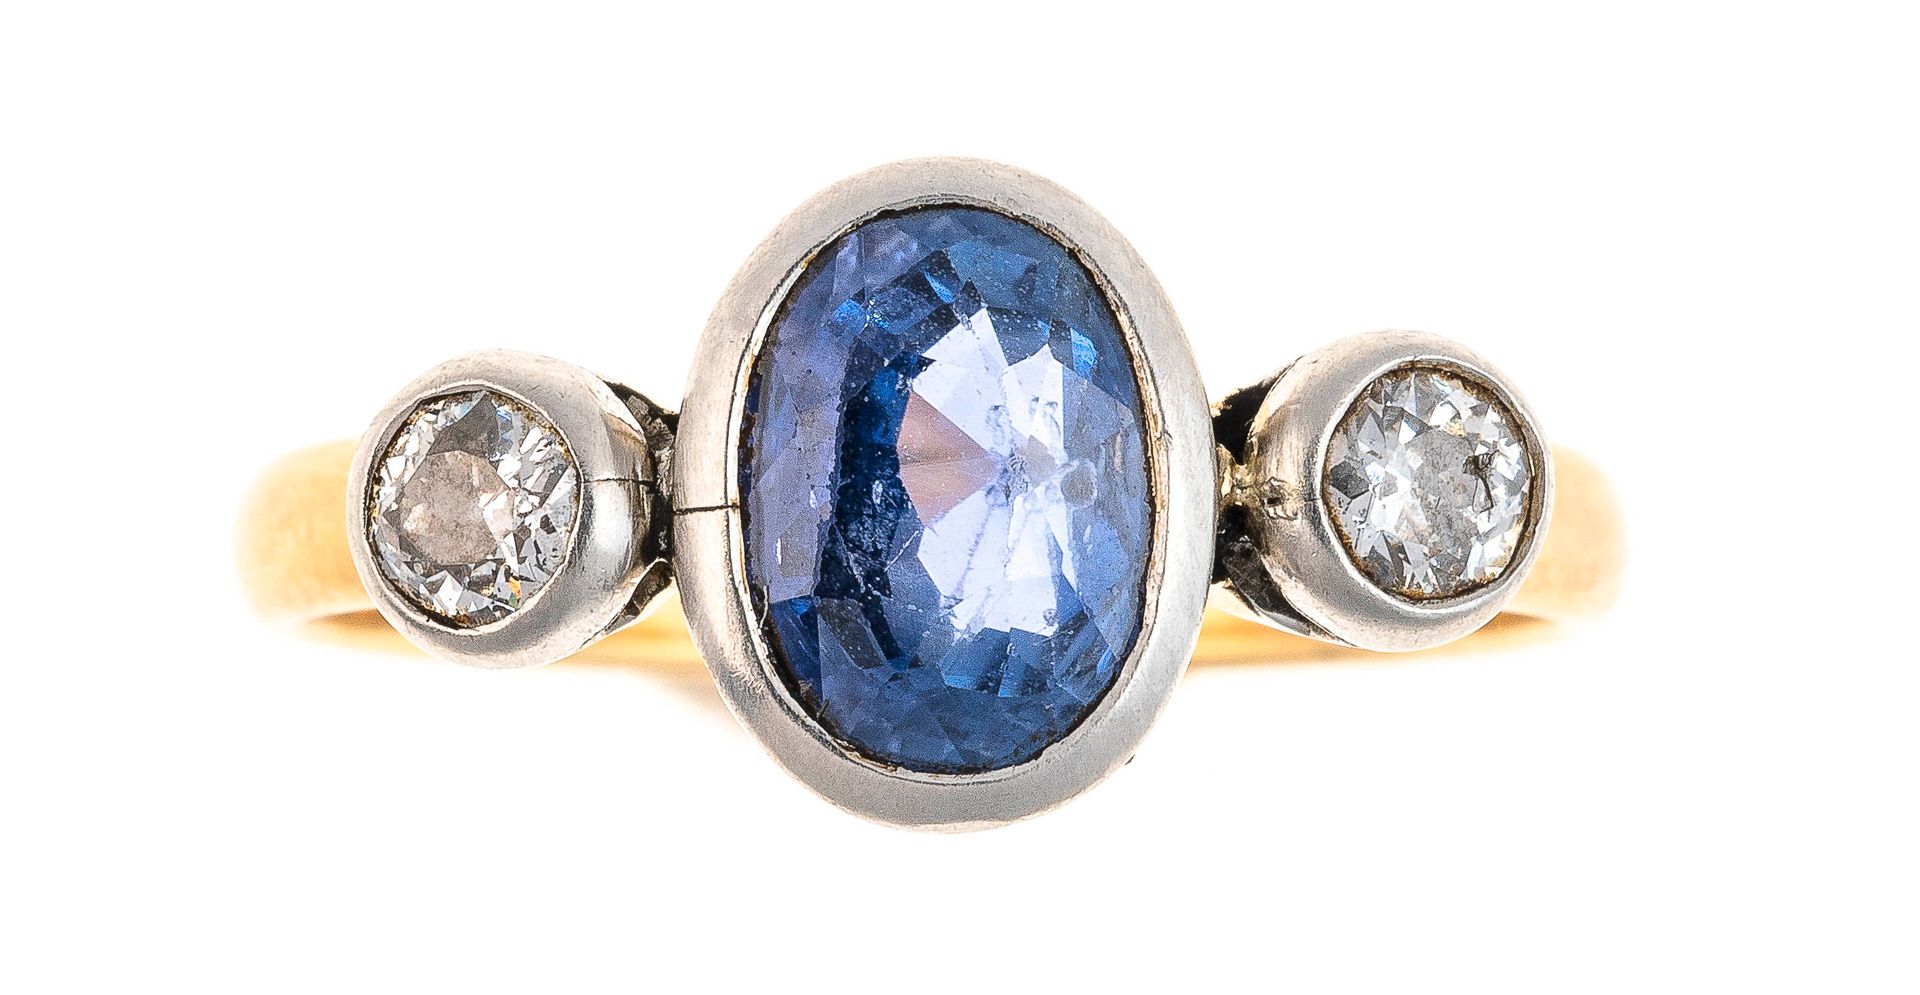 Null 镶嵌着一颗蓝宝石和两颗钻石的金戒指。毛重：3.8克 手指尺寸：56